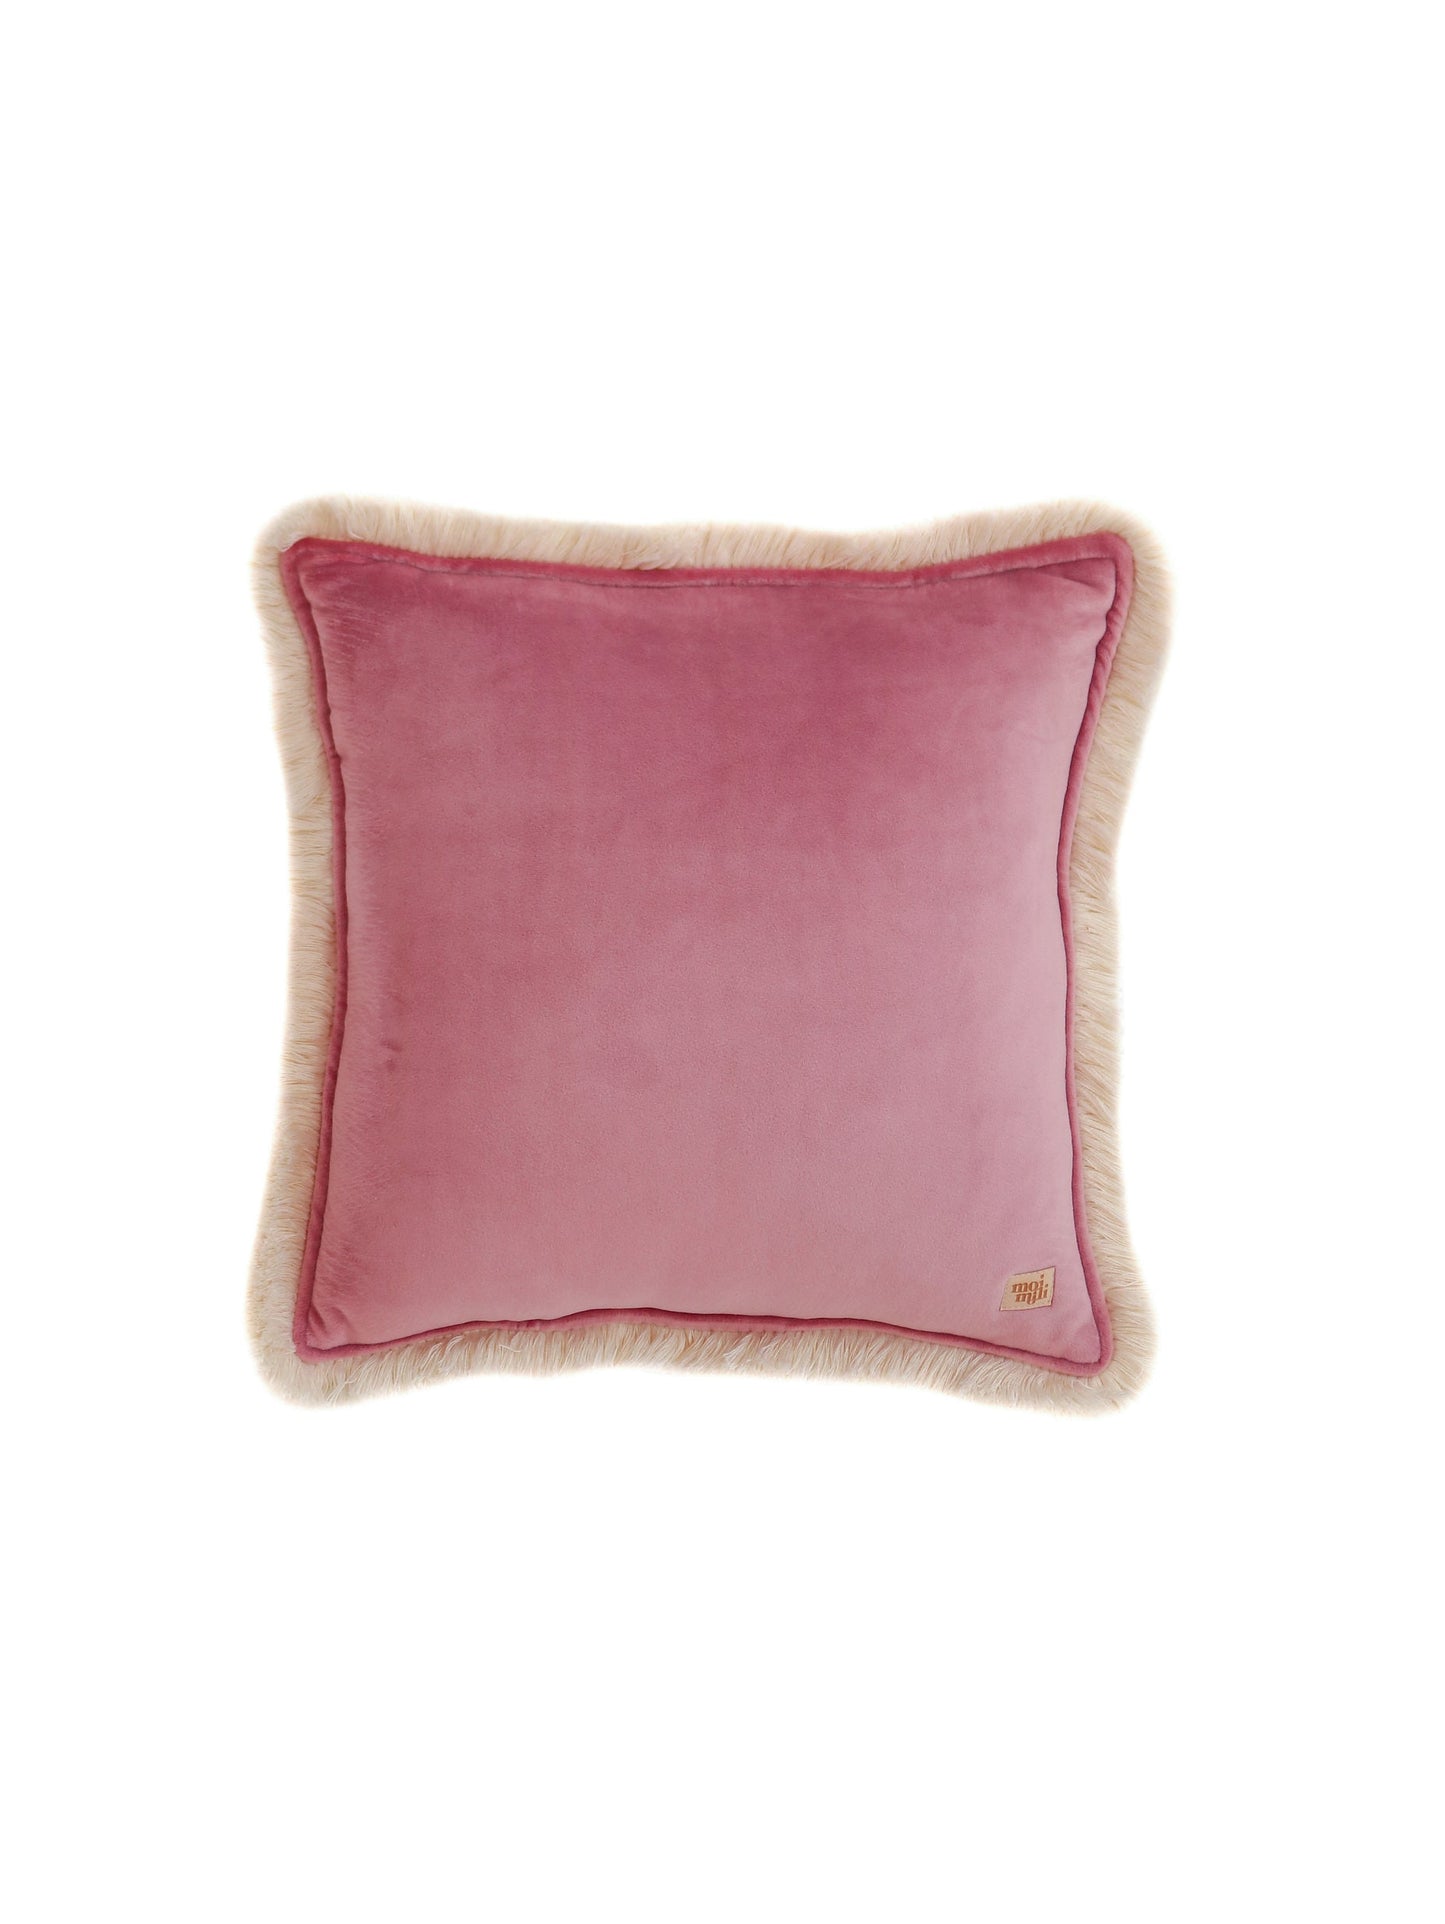 Soft Velvet "Dirty Pink" Pillow with Fringe